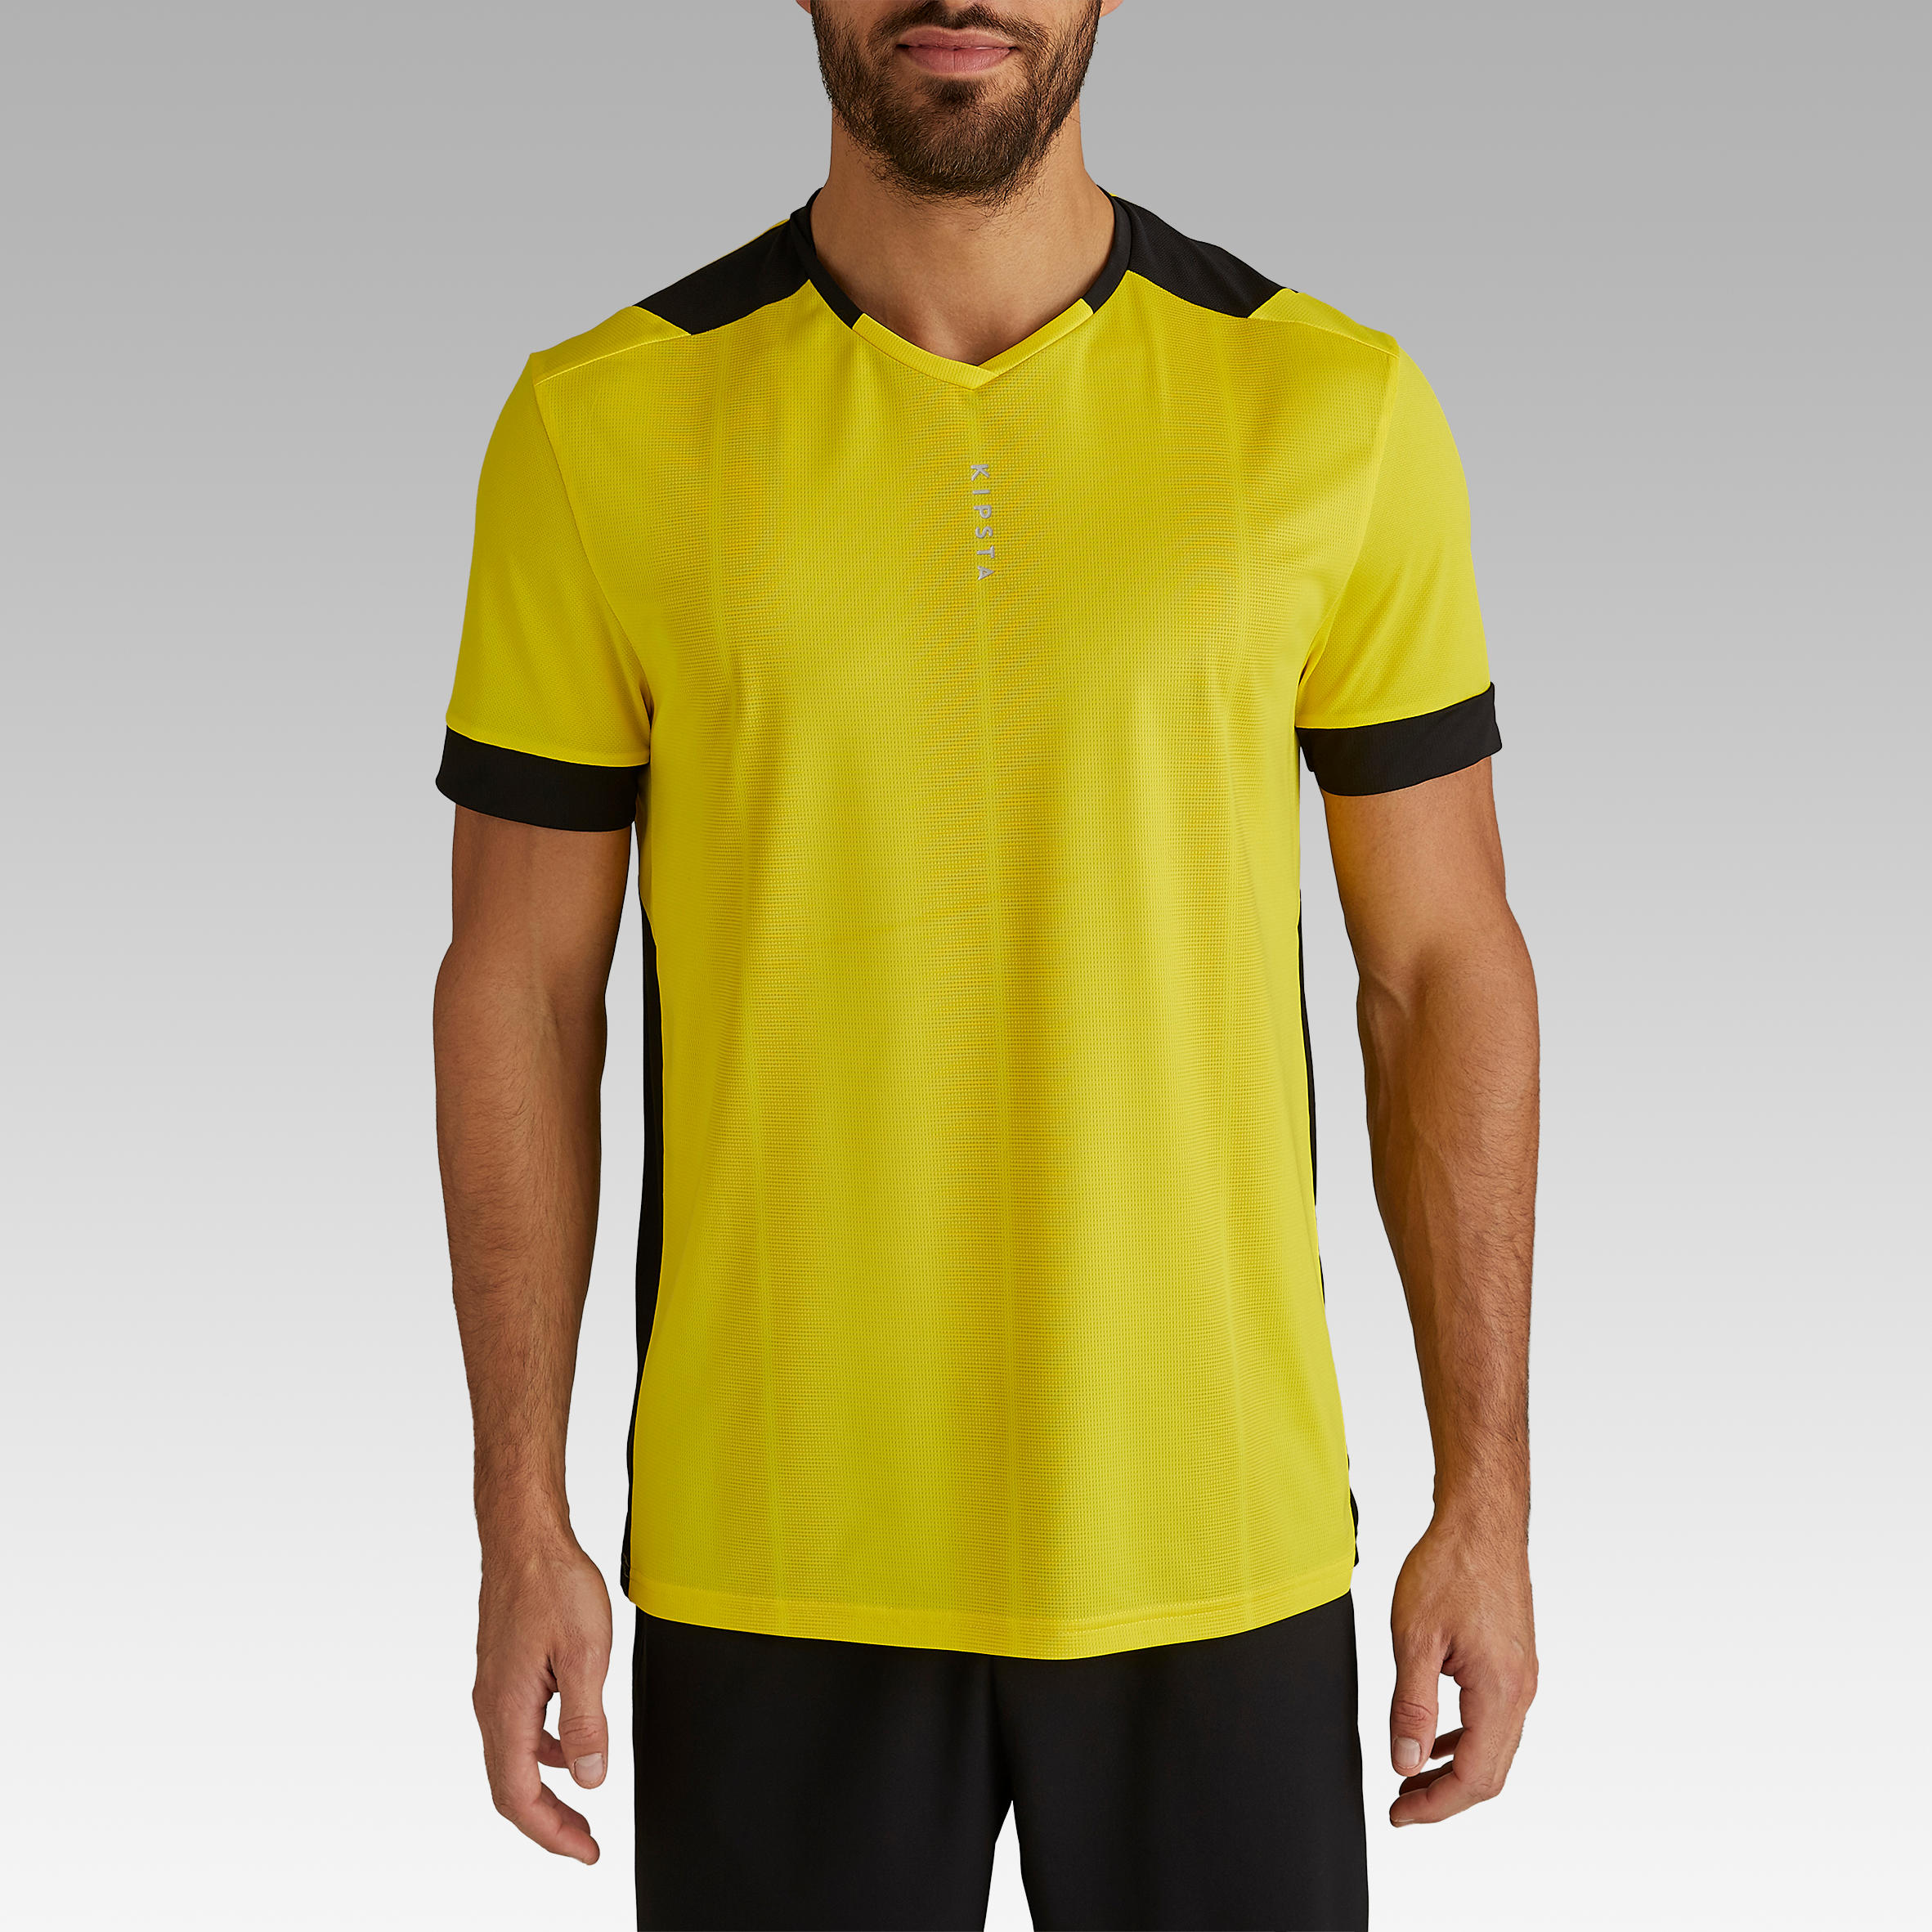 Buy Football Jersey Yellow | Decathlon